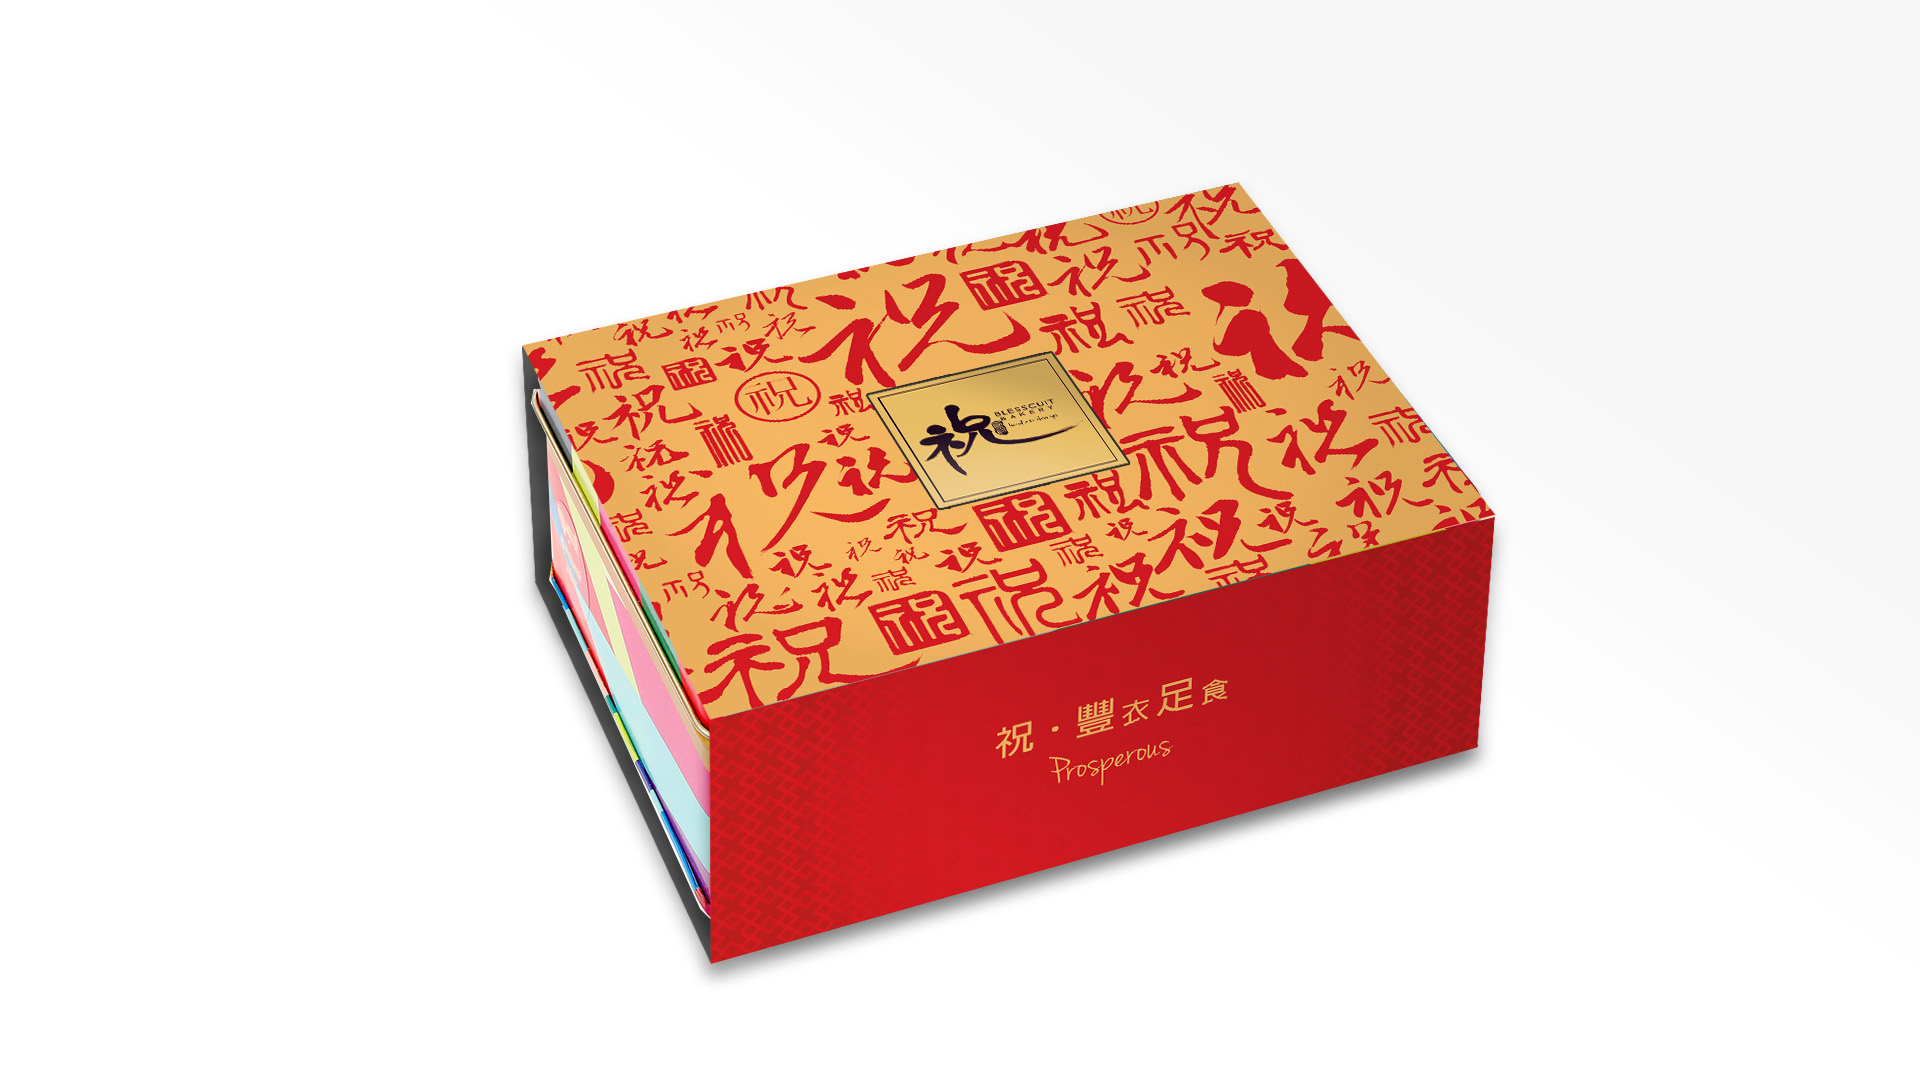 D2 Studio 市場營銷策劃, 品牌策劃與平面設計公司的香港及廣州中國團隊為cookies brand安排平面設計與企業雜誌設計packaging design and gift design 2